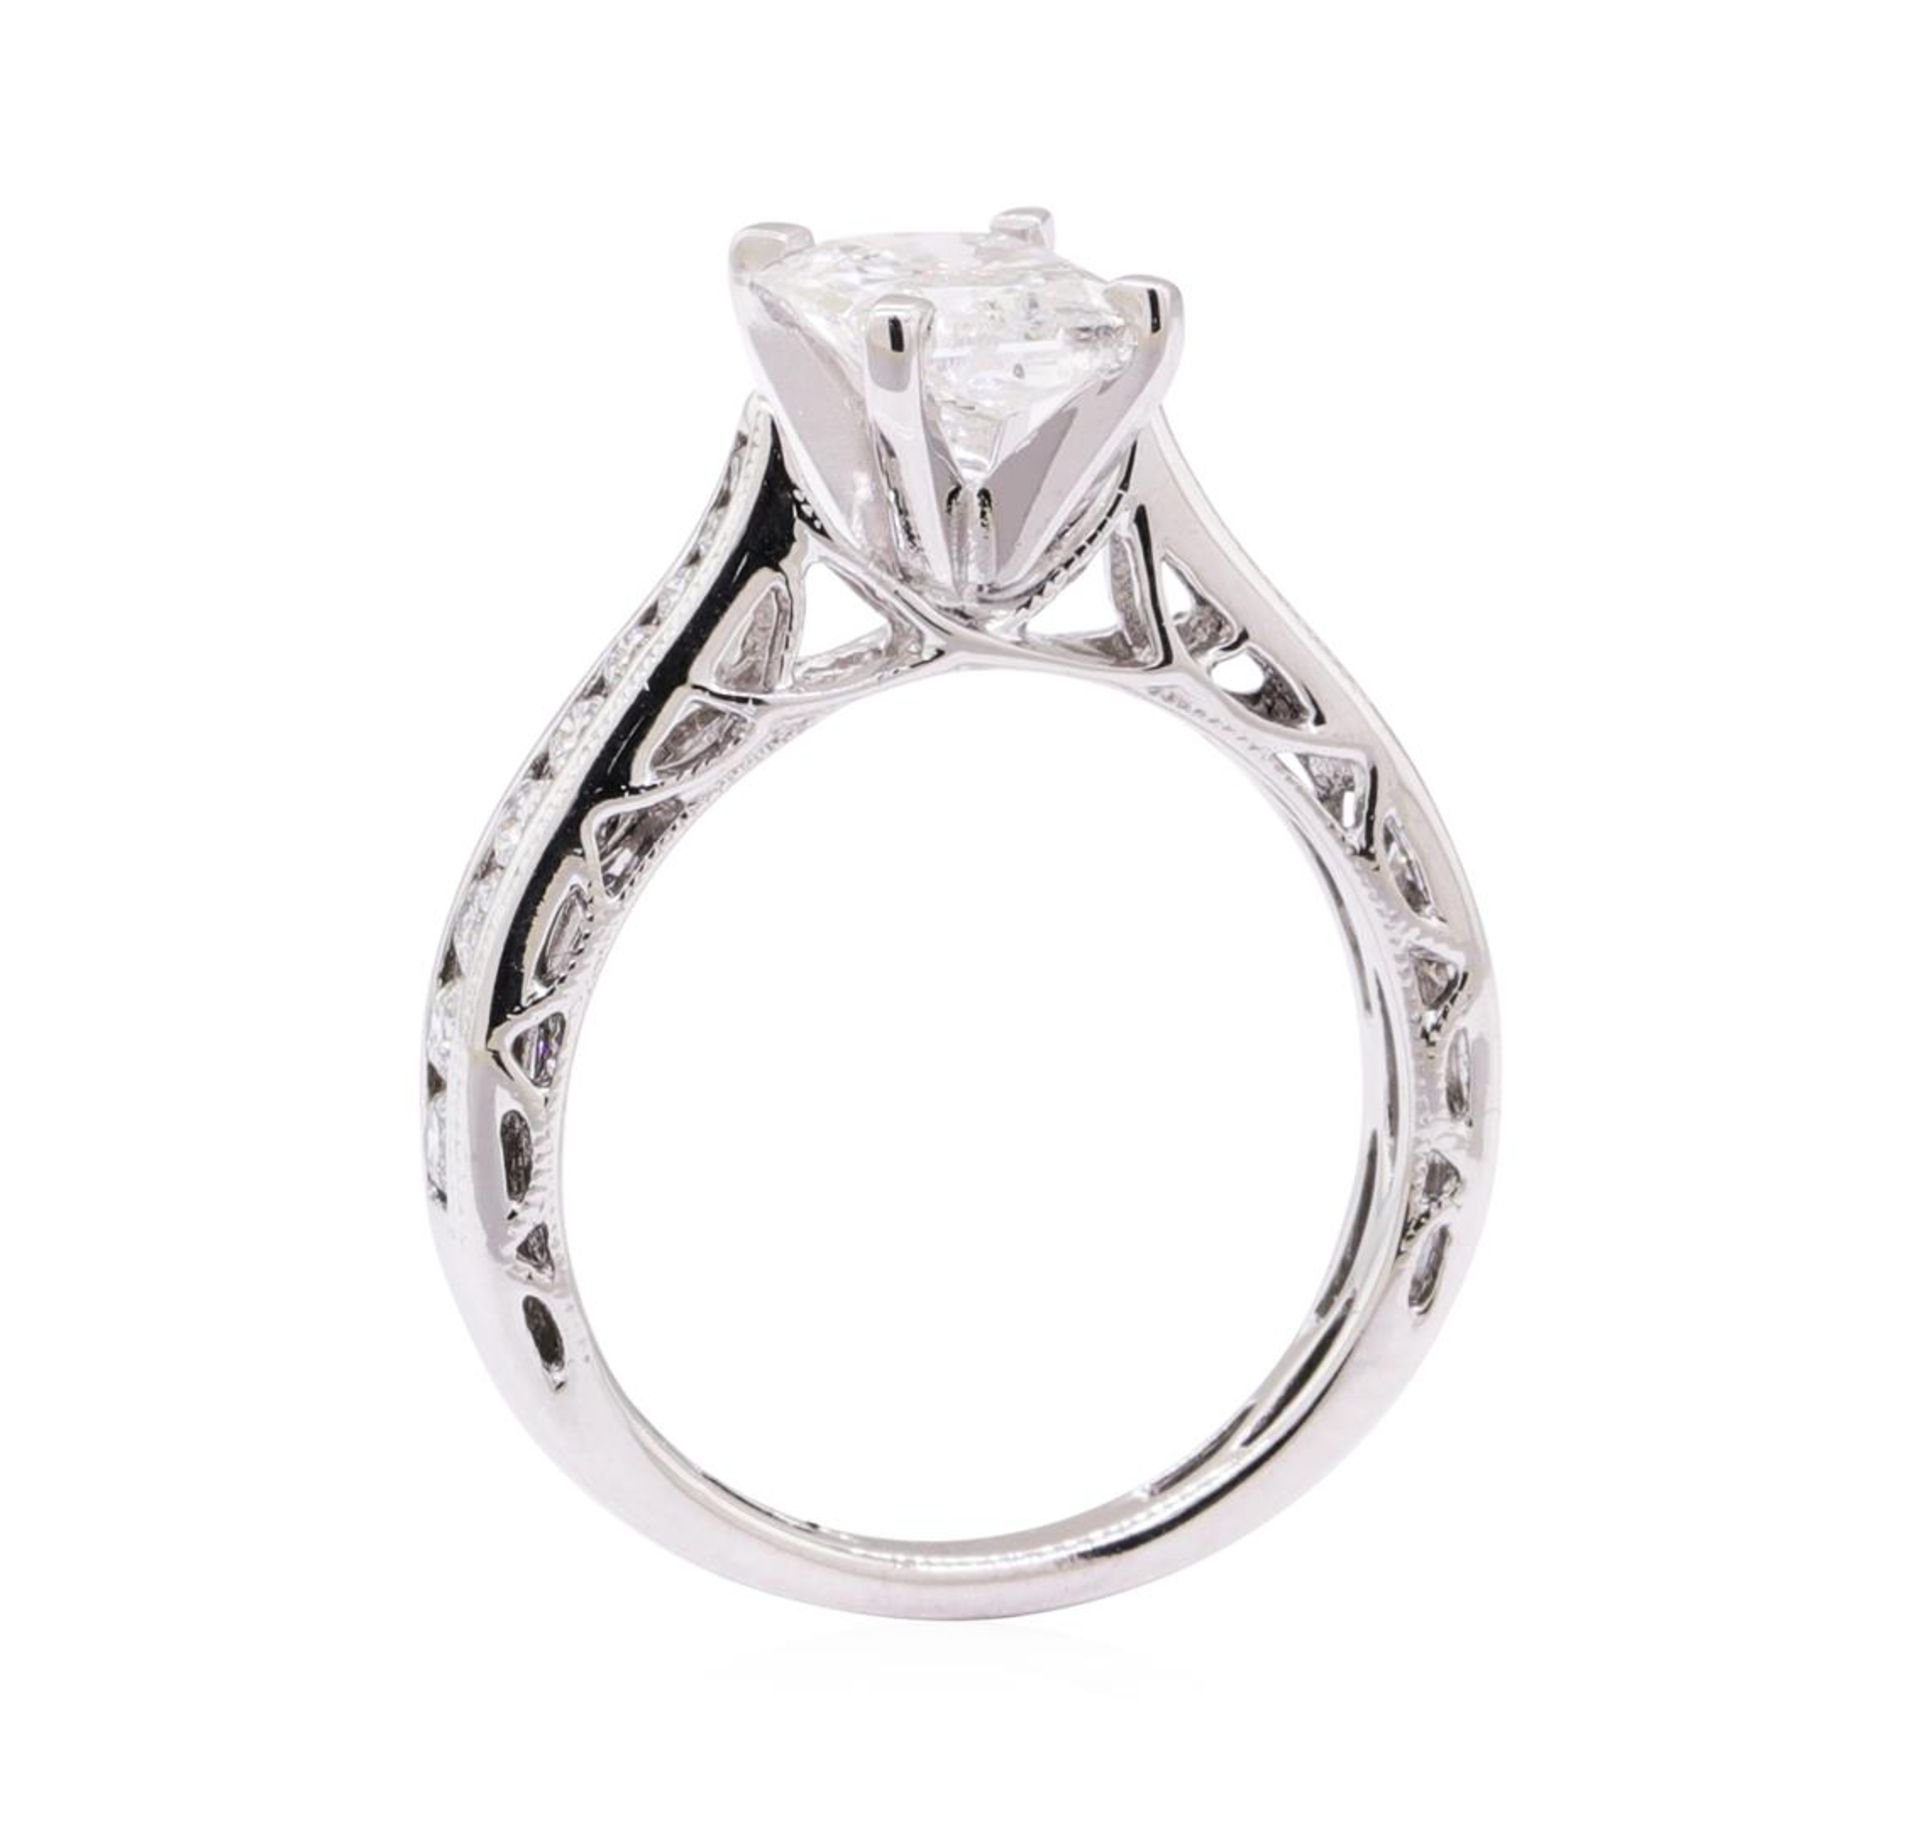 1.48 ctw Diamond Ring - 18KT White Gold - Image 4 of 5